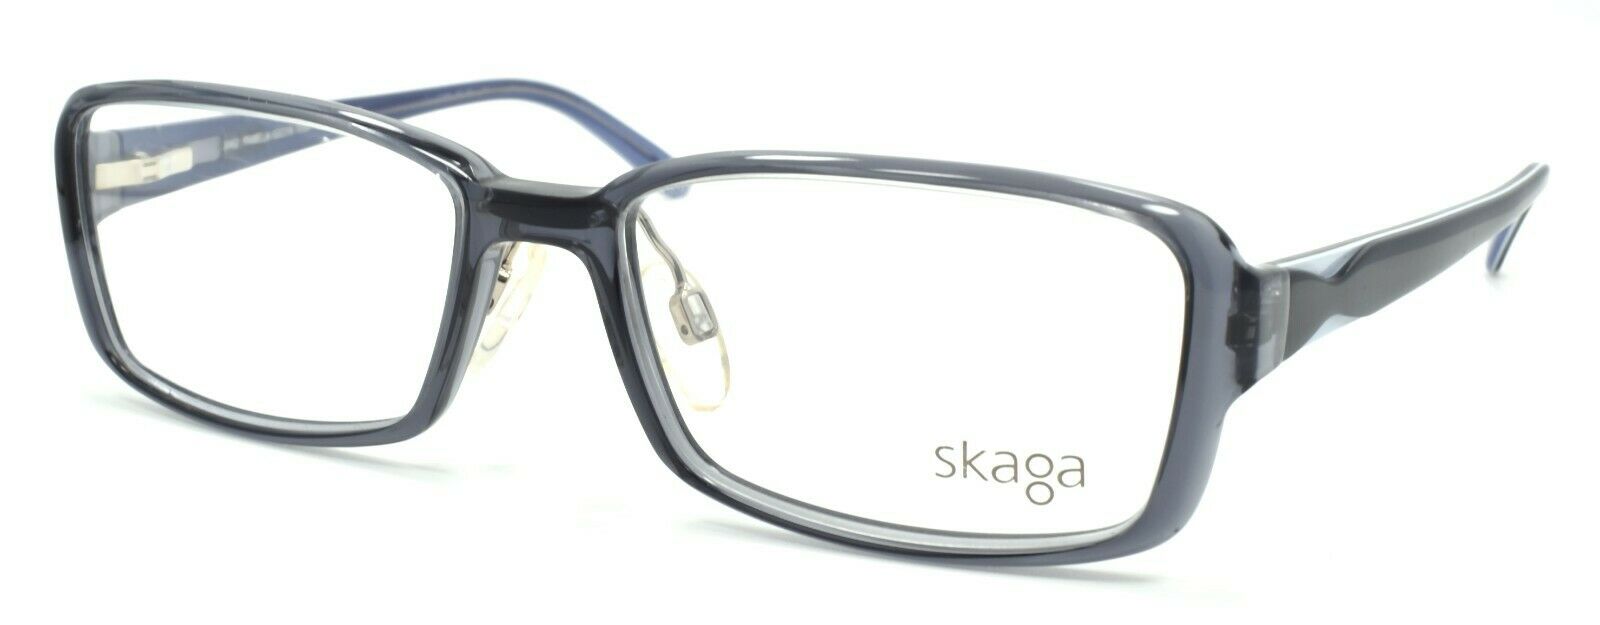 1-Skaga 2442 Pamela 9107 Women's Eyeglasses Frames 53-16-130 Crystal Blue Grey-IKSpecs